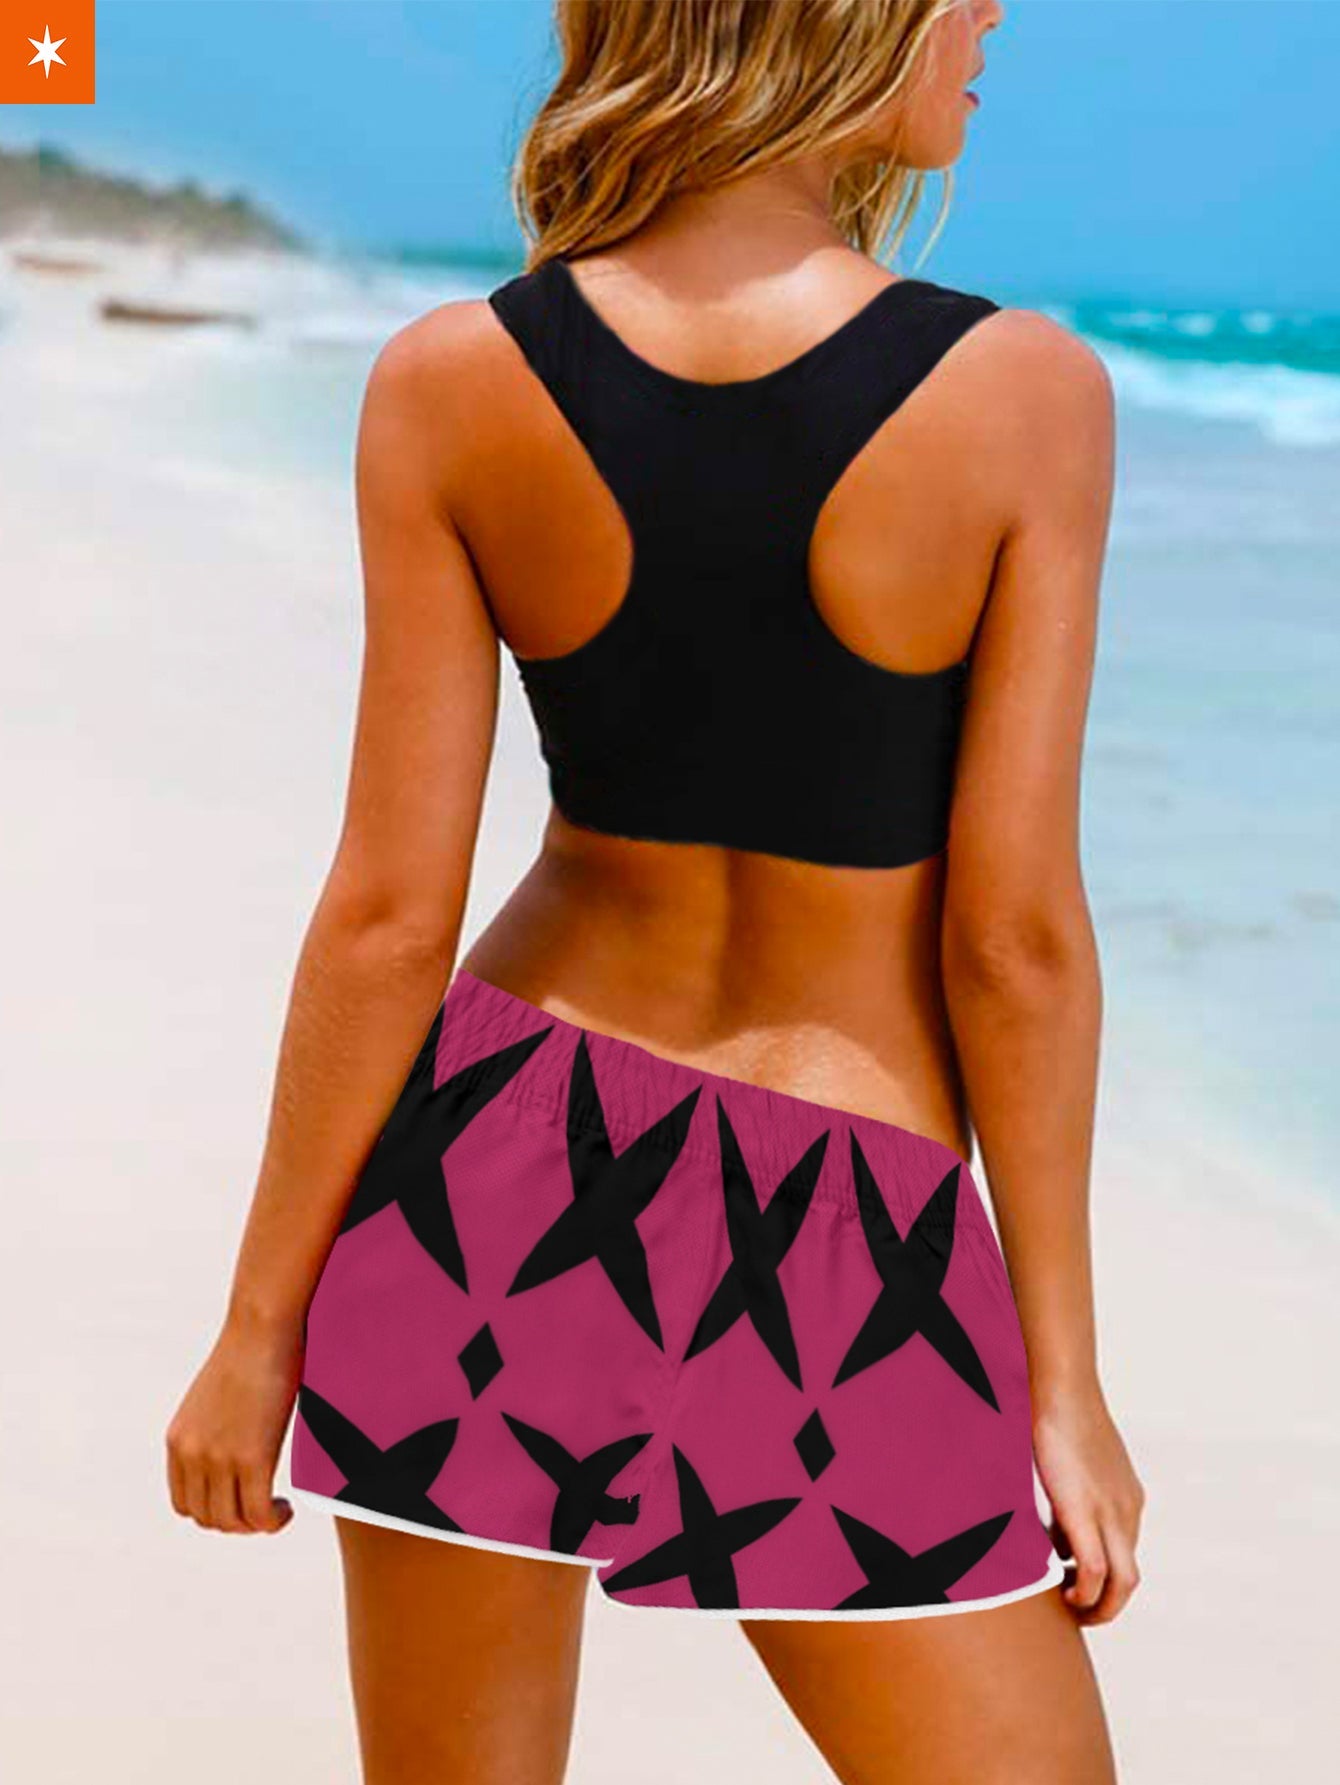 Fandomaniax - [Buy 1 Get 1 SALE] Poke Dark Uniform Women Beach Shorts